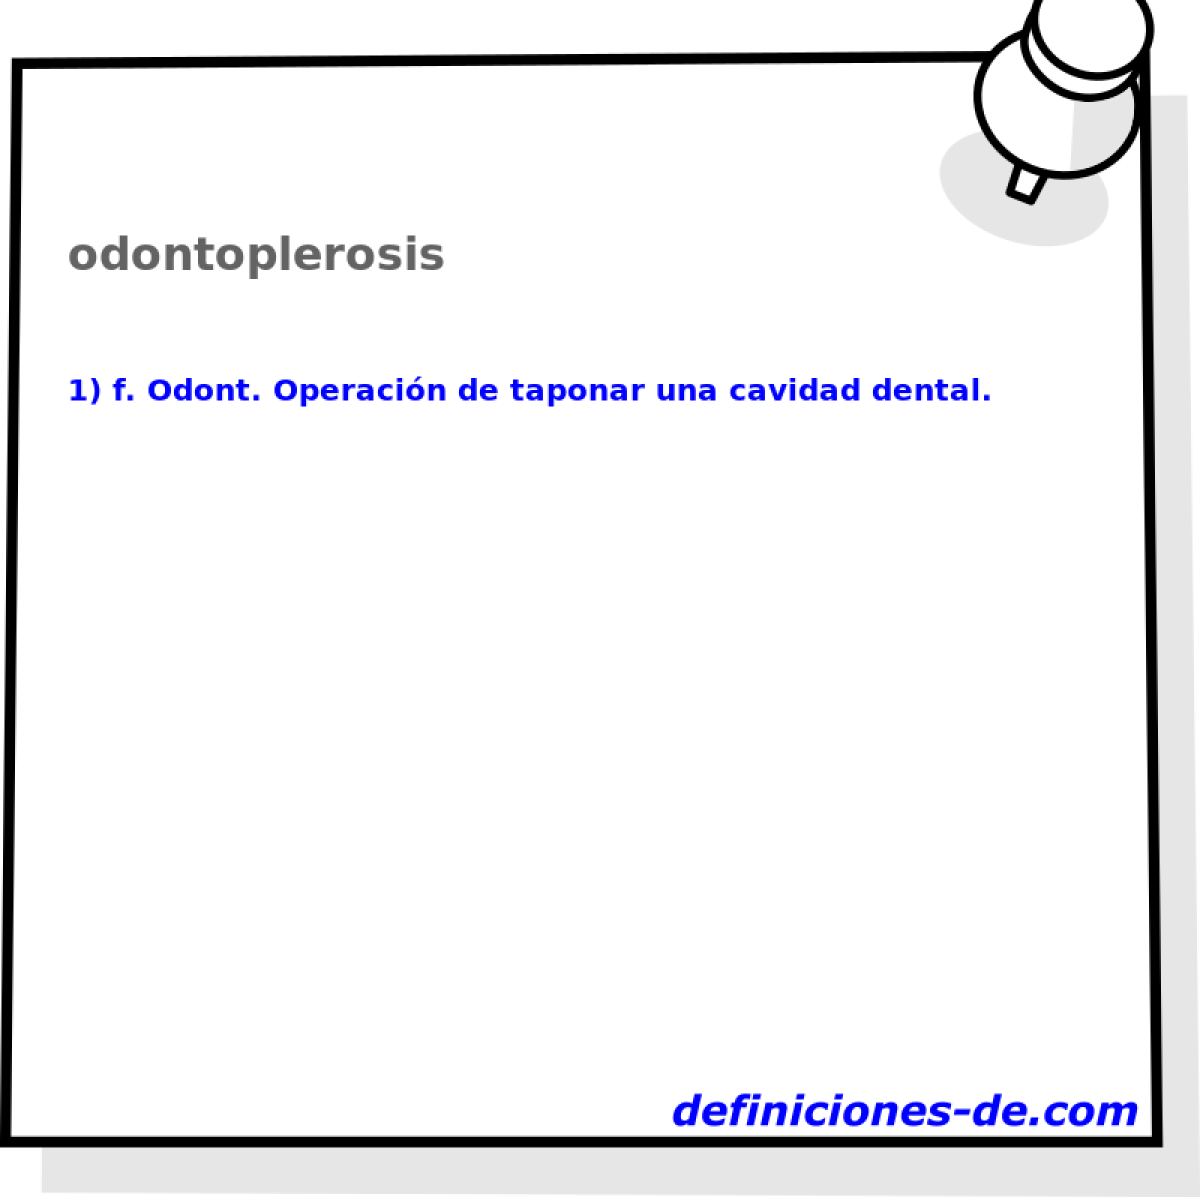 odontoplerosis 